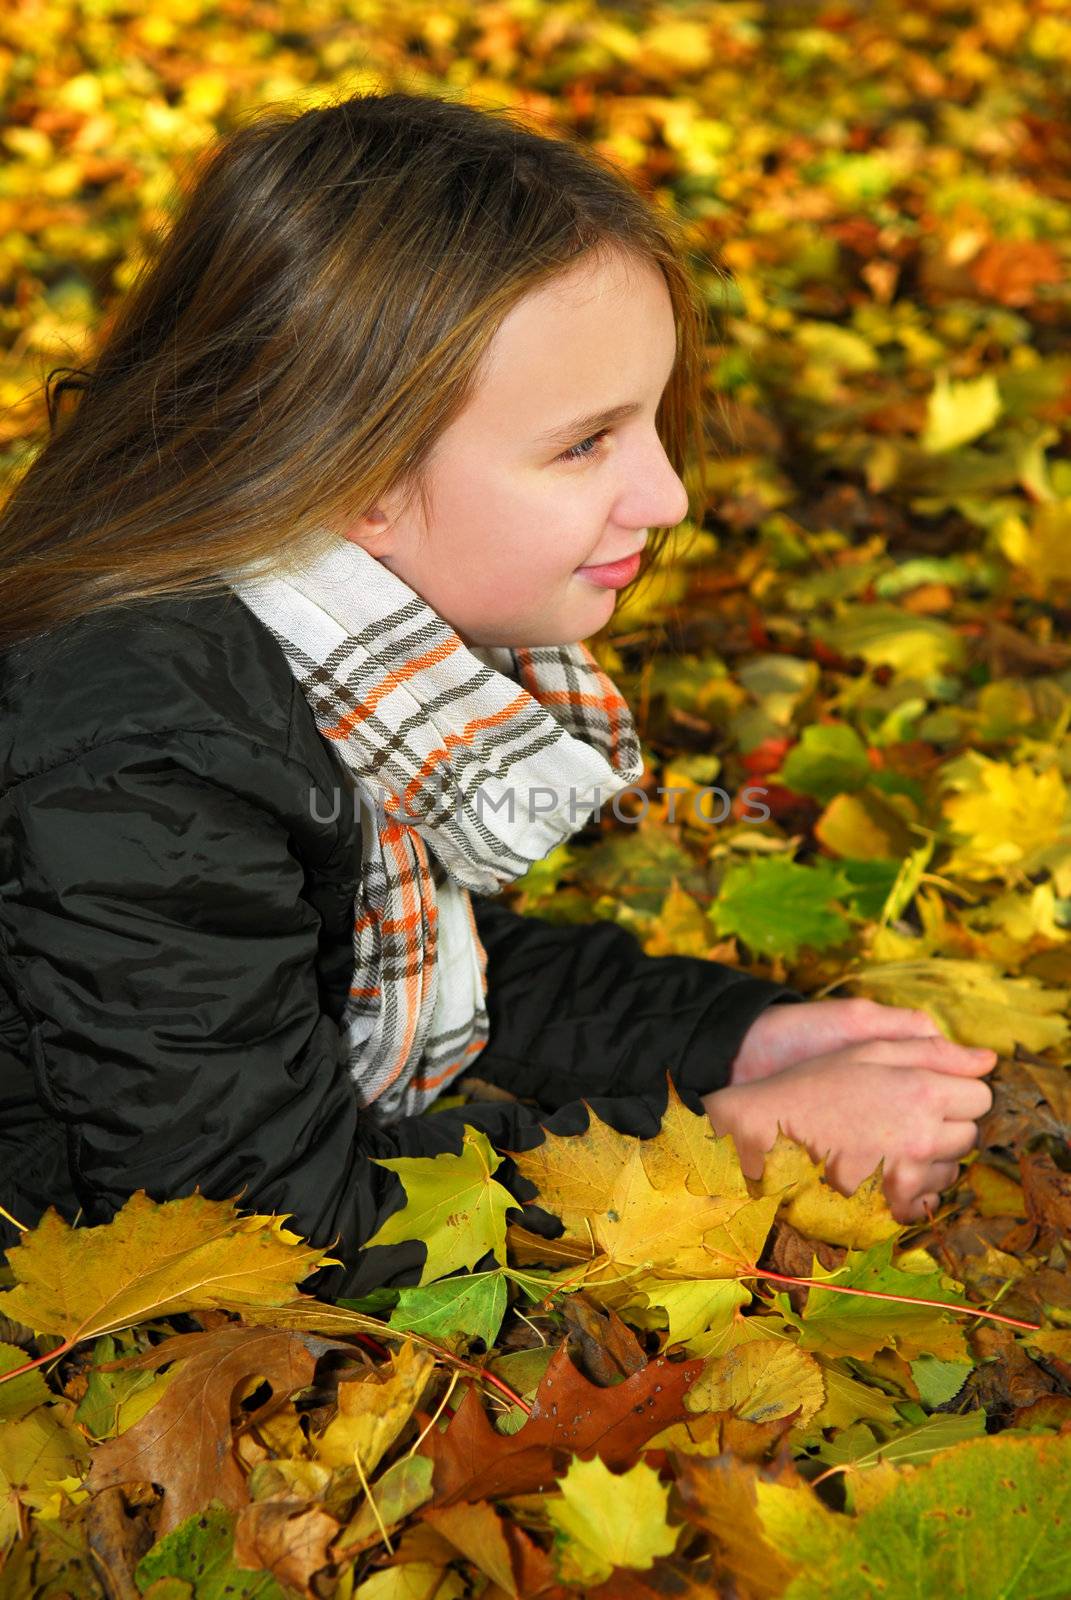 Portrait of a beautiful teenage girl lying among fallen maple leaves in fall park